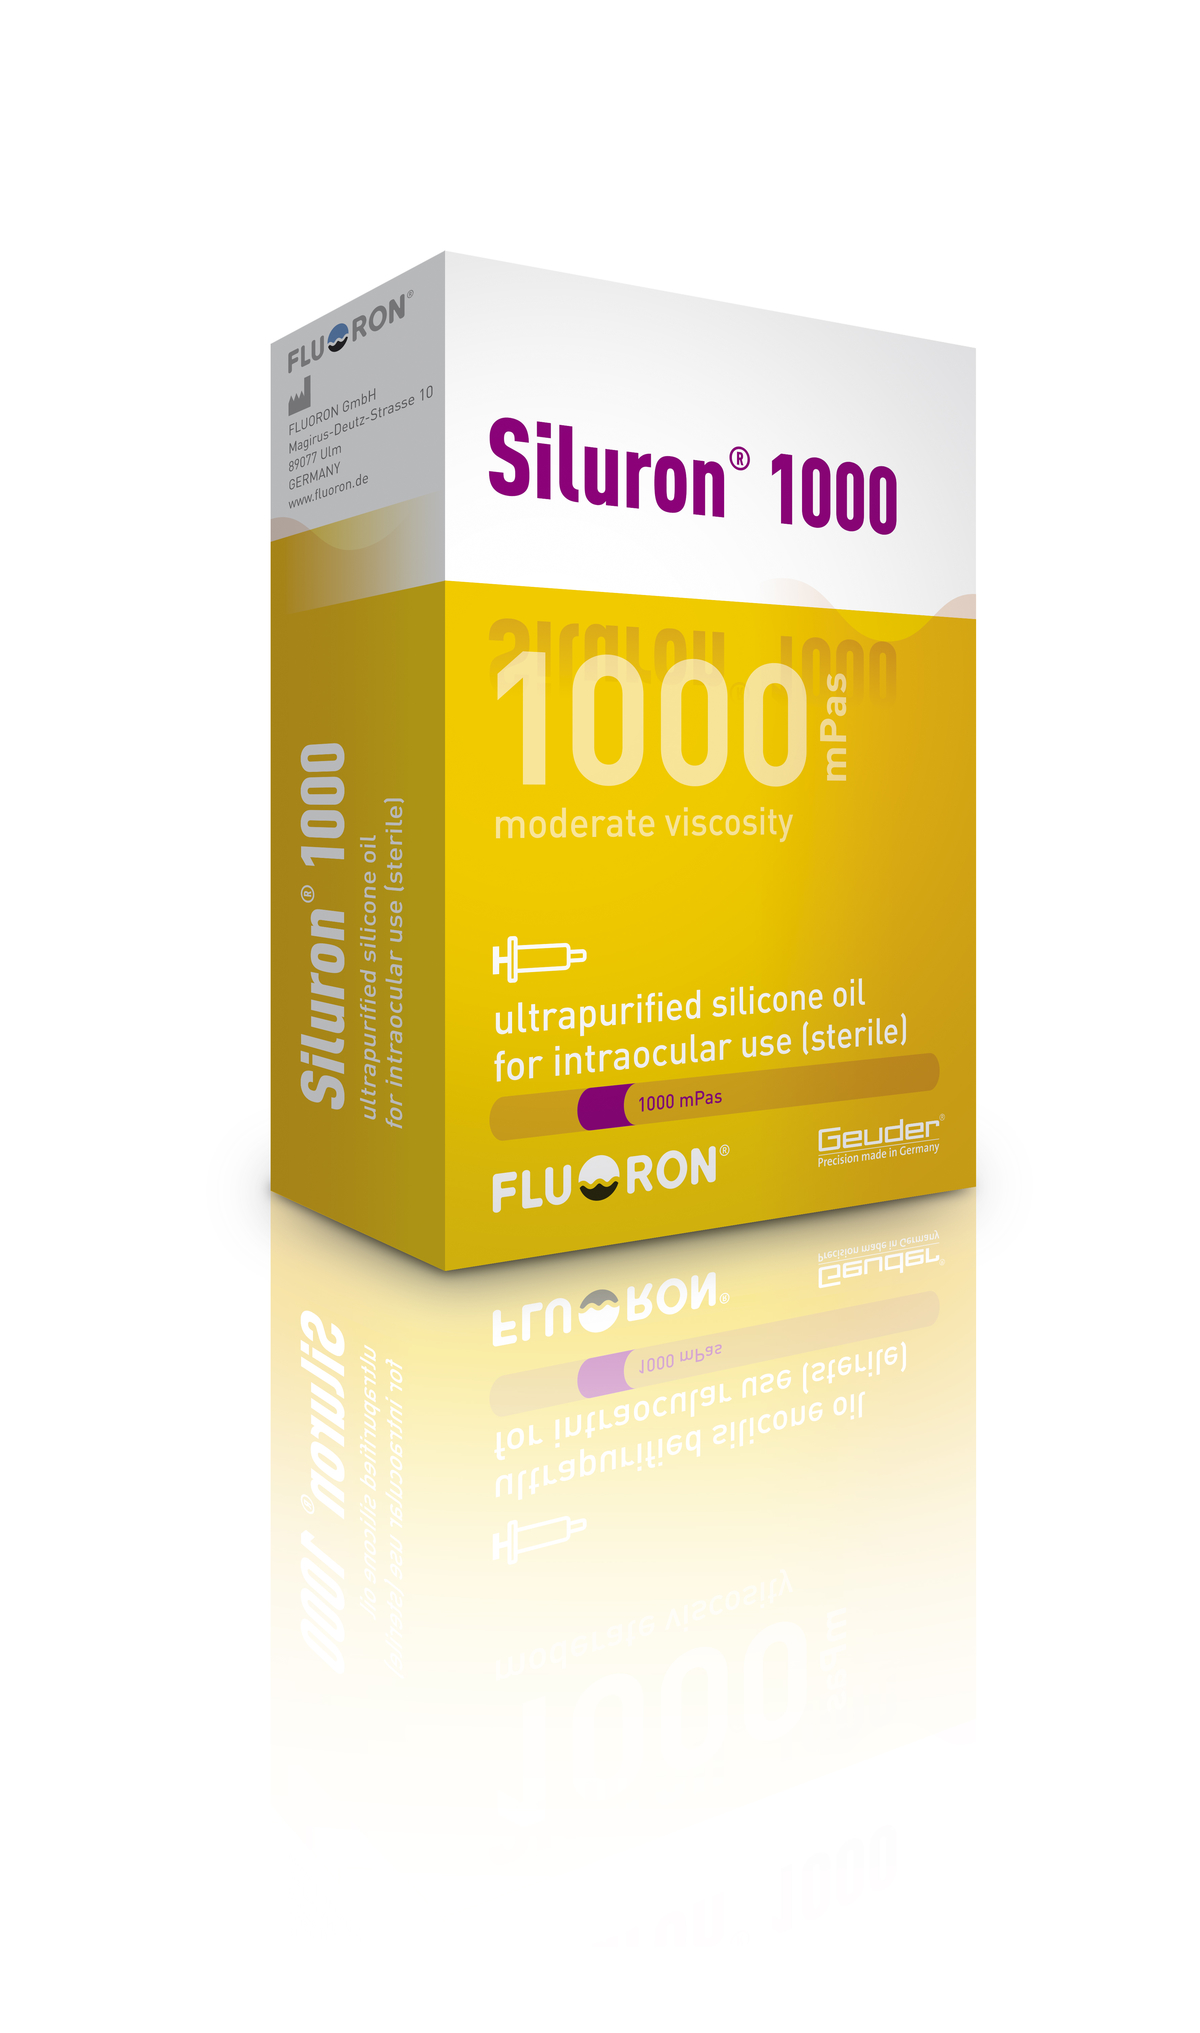 csm_Packshot-Siluron-1000-syringe-RGB_retines-ophtalmologies-freedom-medicale